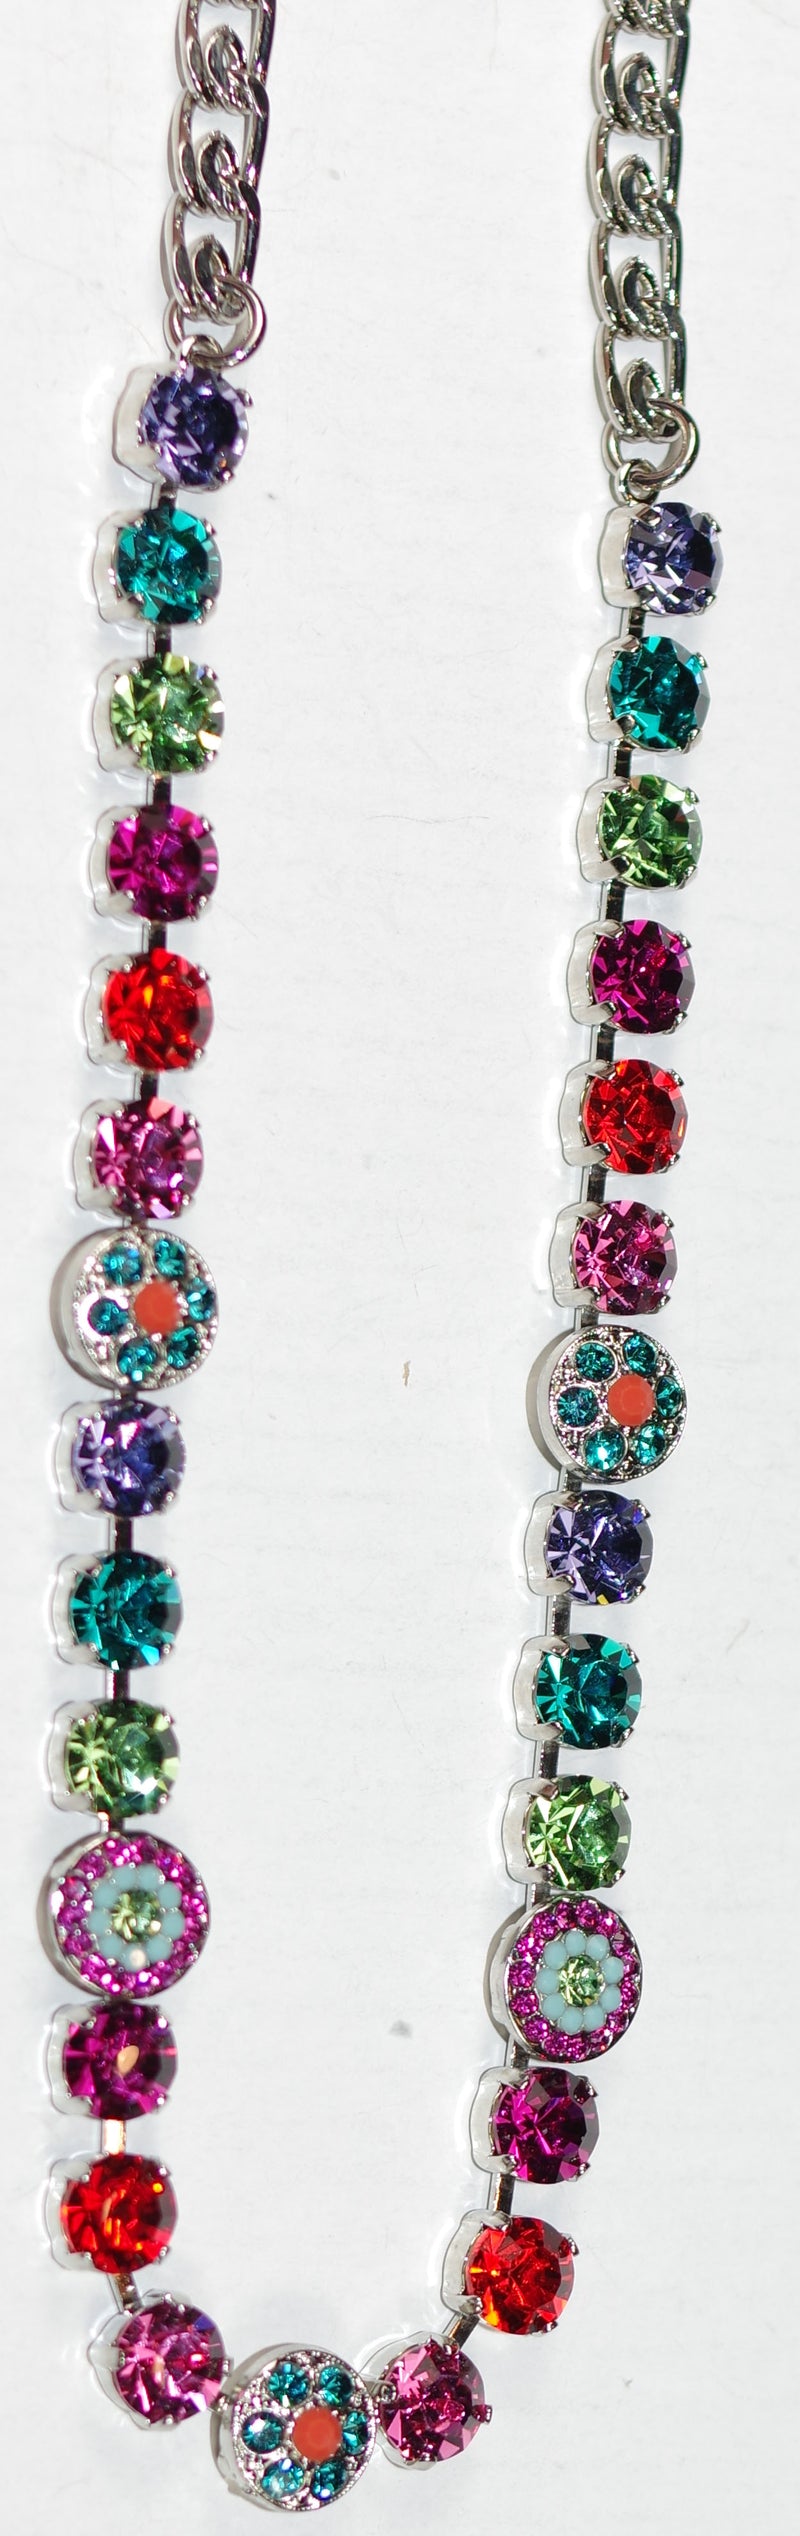 MARIANA NECKLACE RAINBOW SHERBERT: green, teal, pink, purple, orange 1/4" stones in silver rhodium setting, 18" adjustable chain